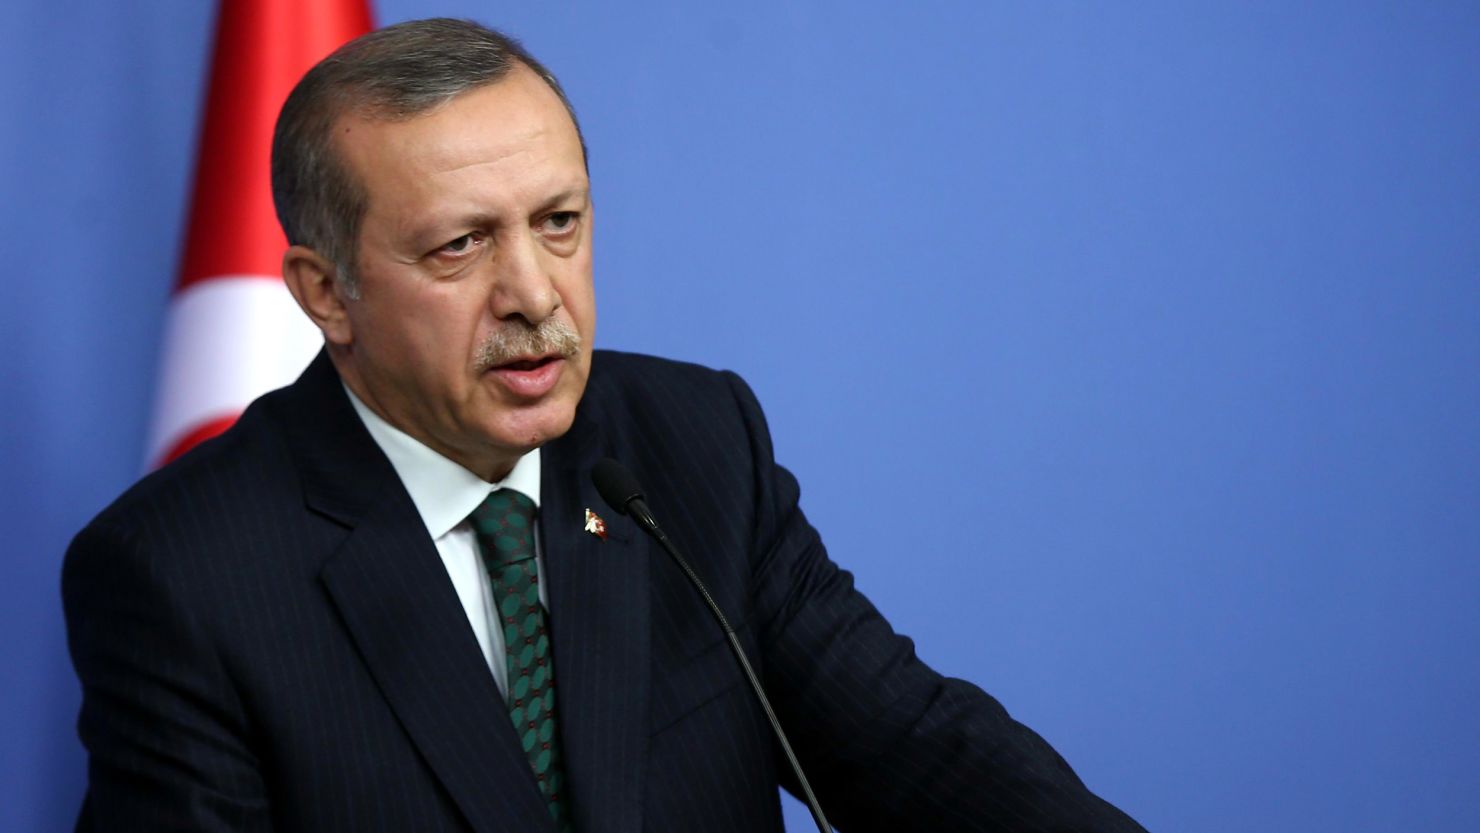 Turkish Prime Minister Recep Tayyip Erdogan in Ankara on December 18, 2013